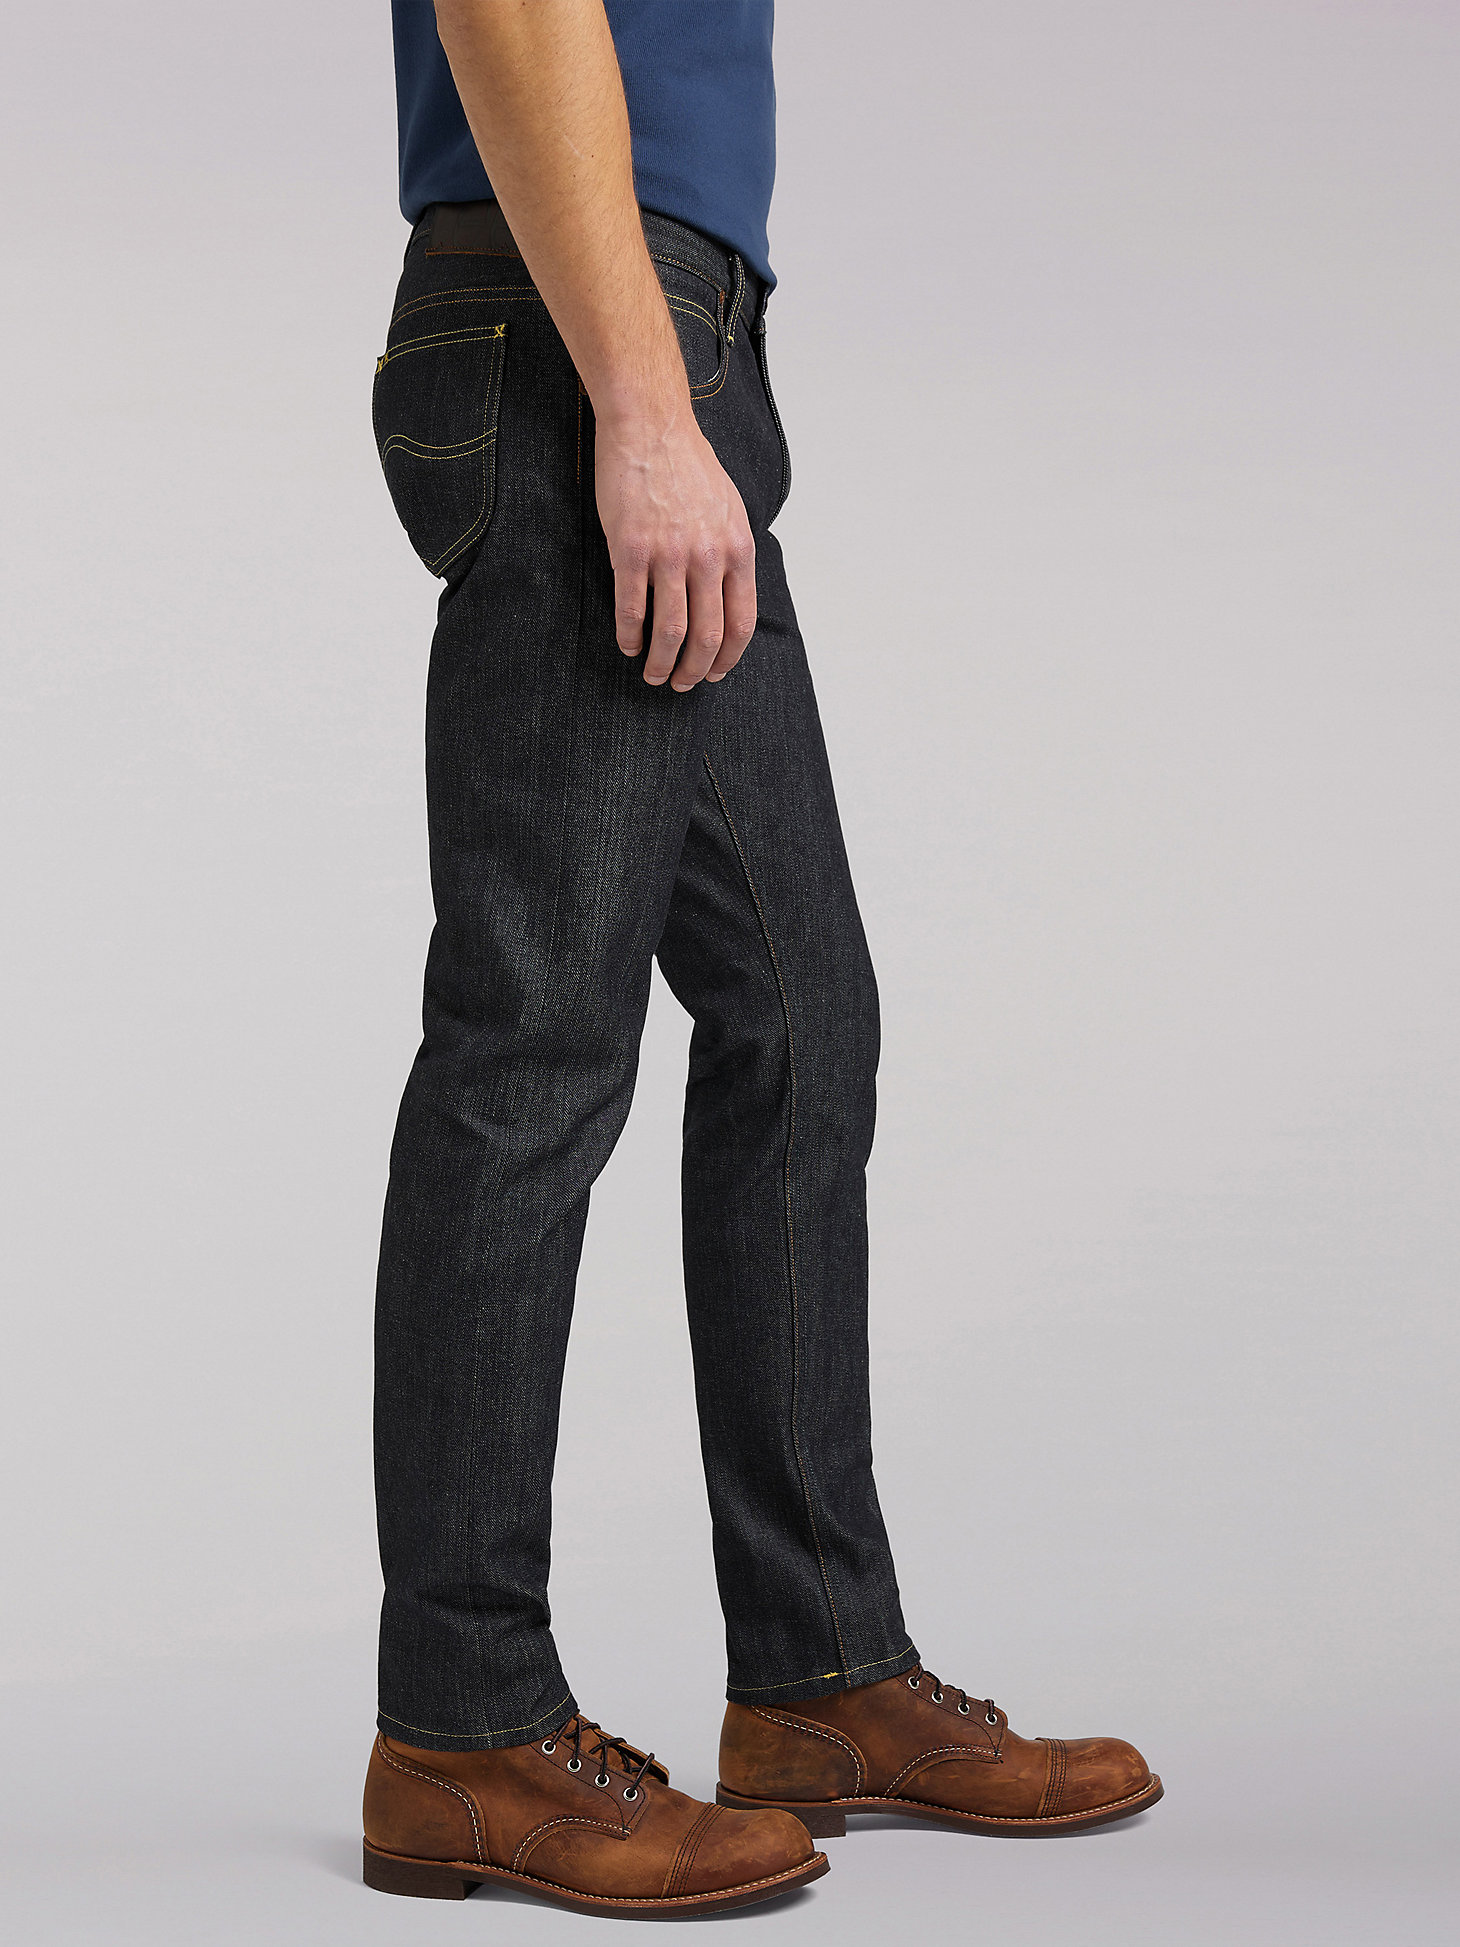 Men's Lee 101 Rider Slim Fit Jean in Dry Indigo alternative view 2